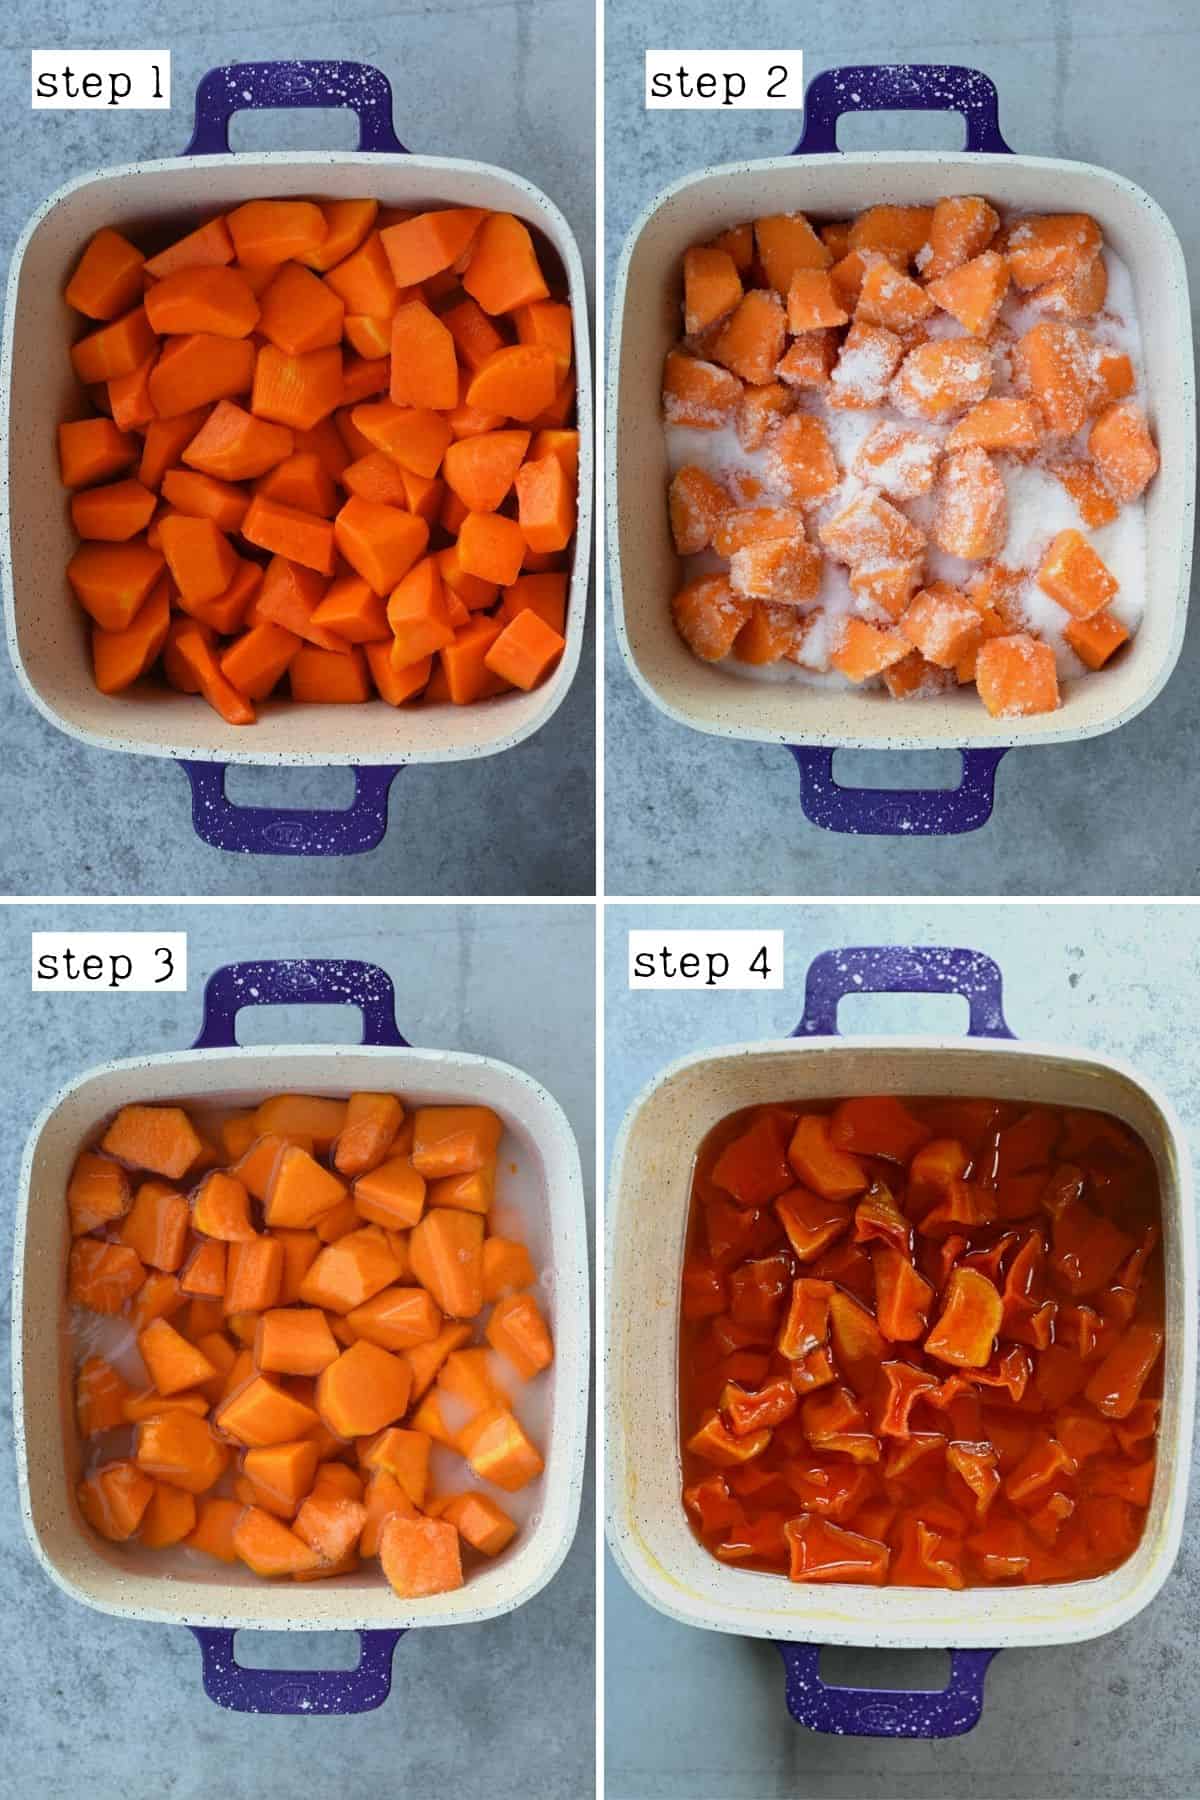 Steps for preparing candied pumpkin